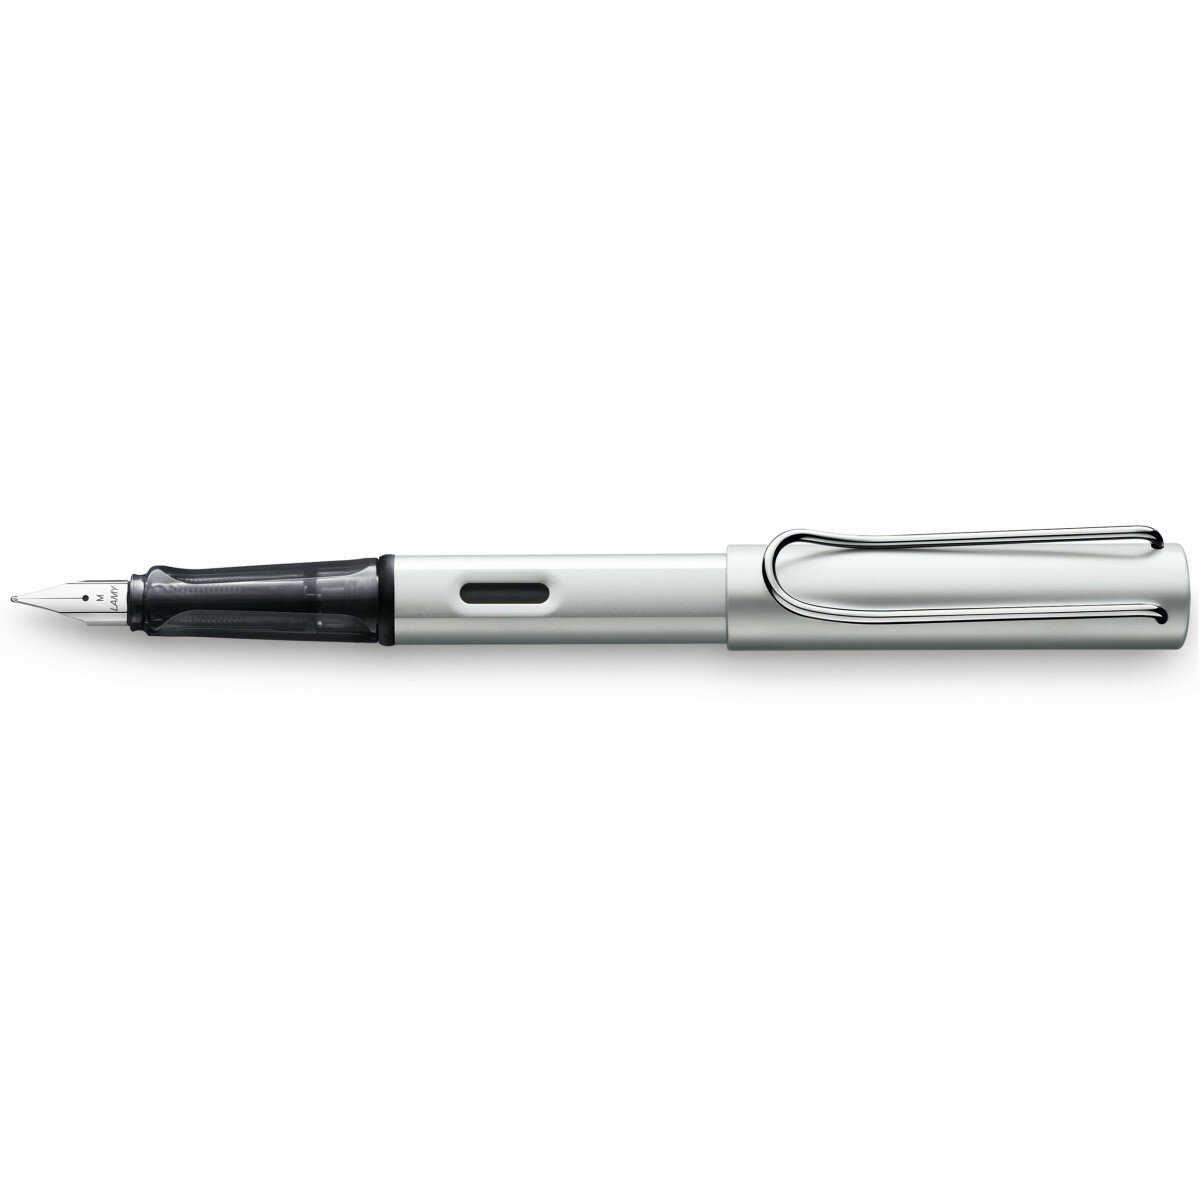 Перьевая ручка Lamy Al-star White Silver Special Edition 2022 перо M (4036520)